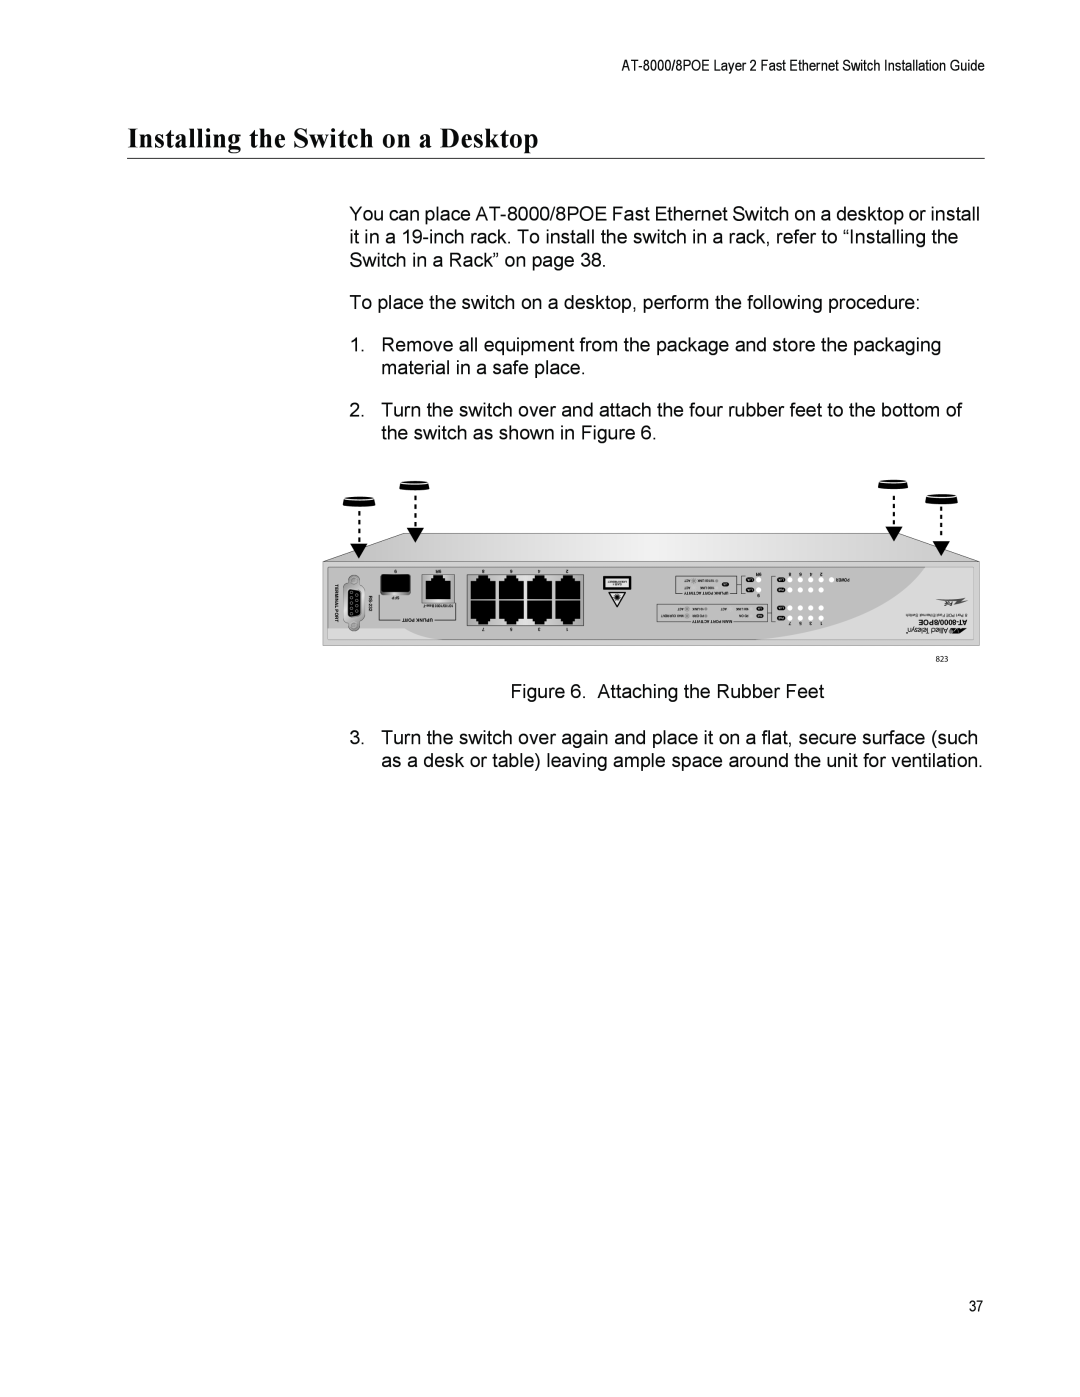 Allied Telesis 8000/8POE manual Installing the Switch on a Desktop 